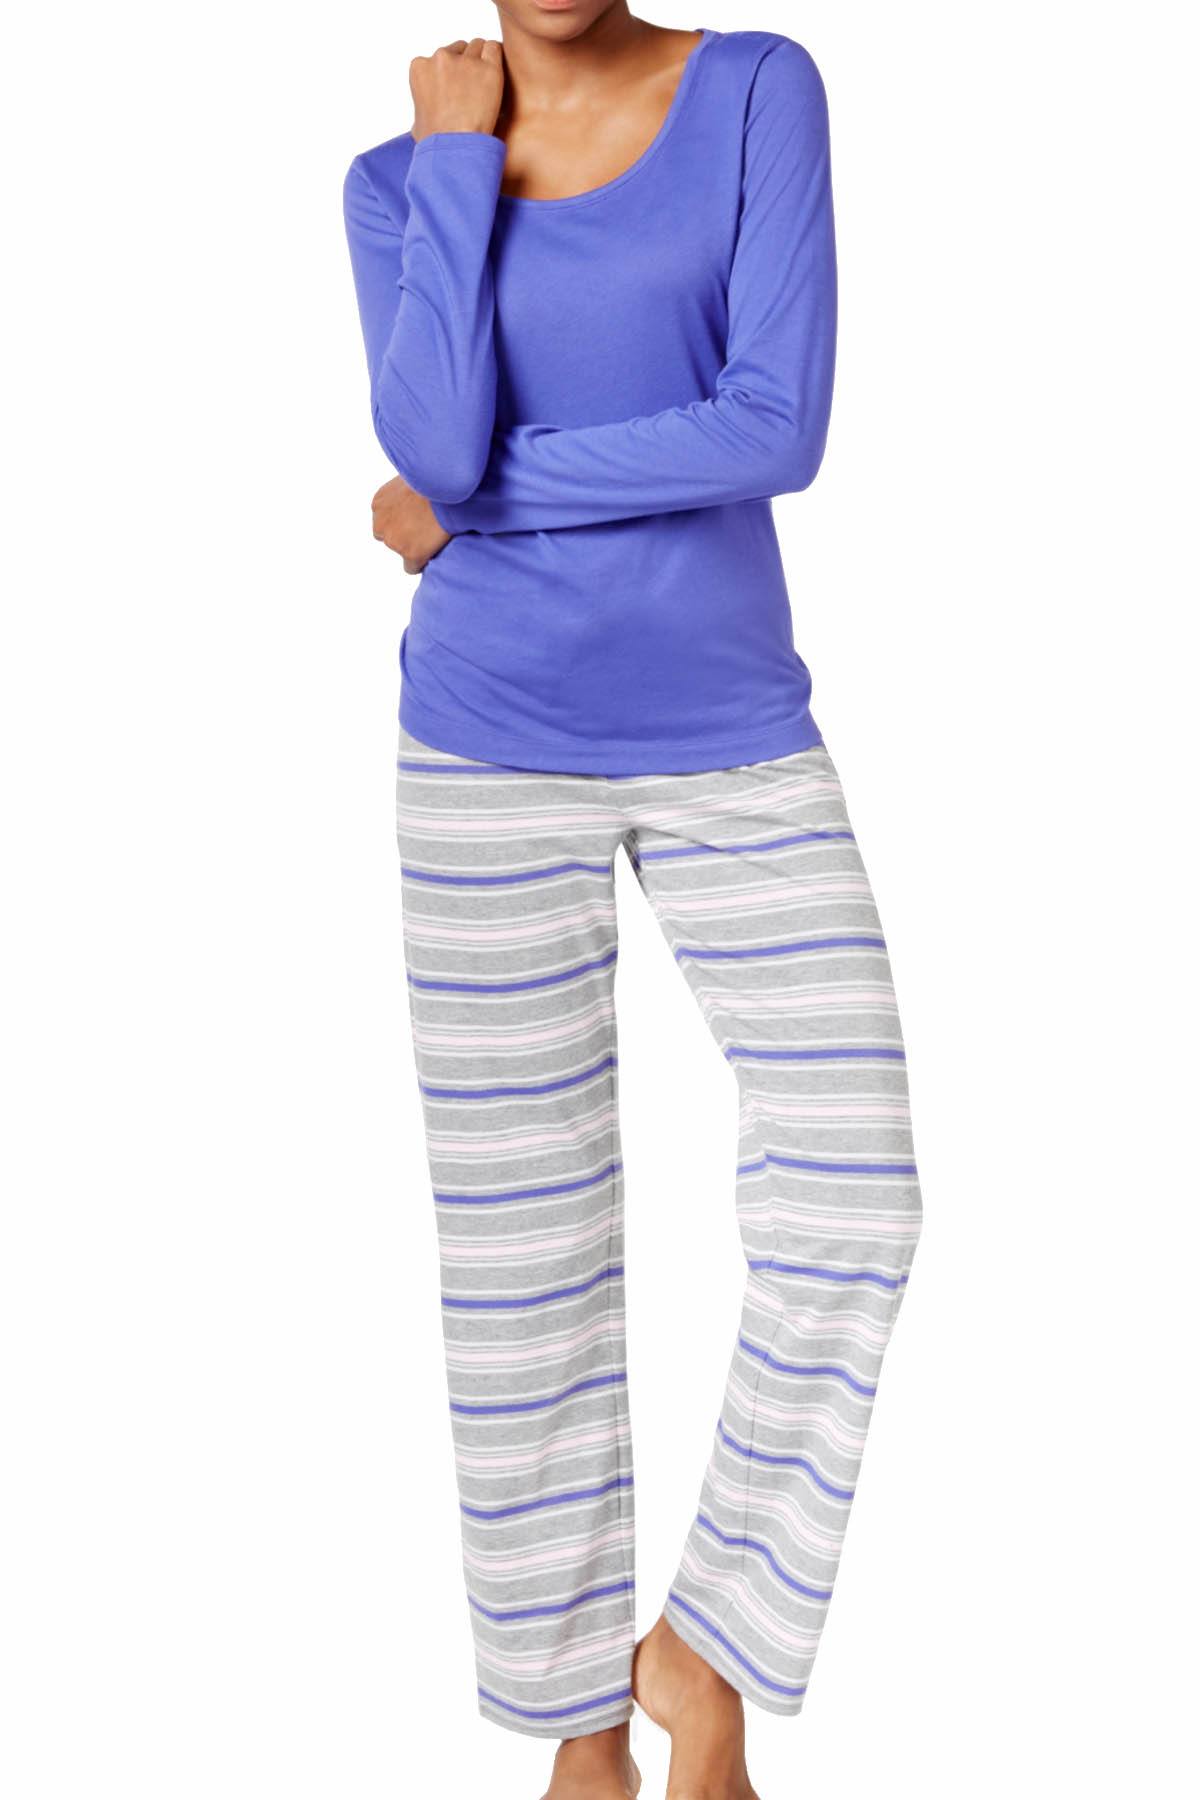 Jenni by Jennifer Moore Purple/Grey Sleepy-Stripe Knit Top & Printed Pant PJ Set